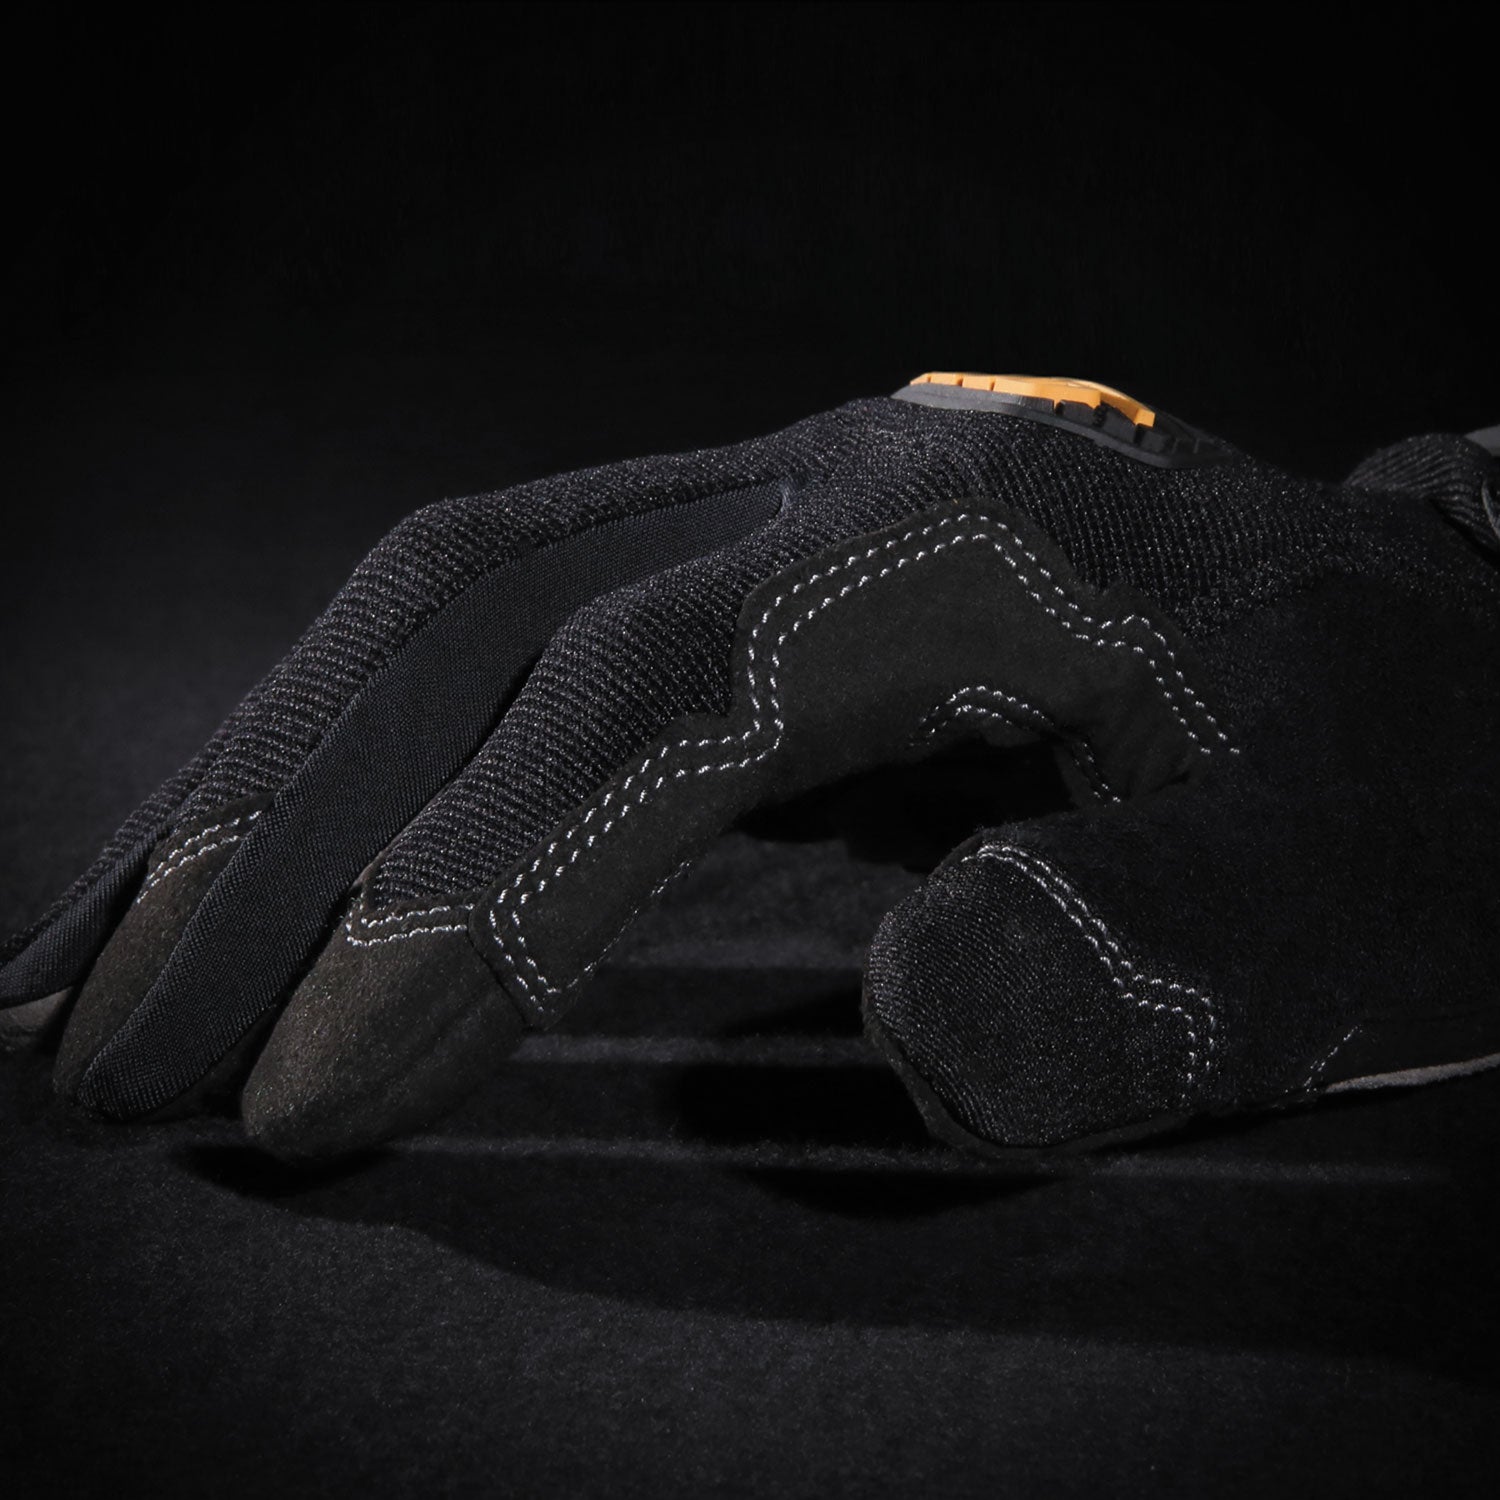 General Utility Spandex Gloves, Black, X-Large, Pair - 